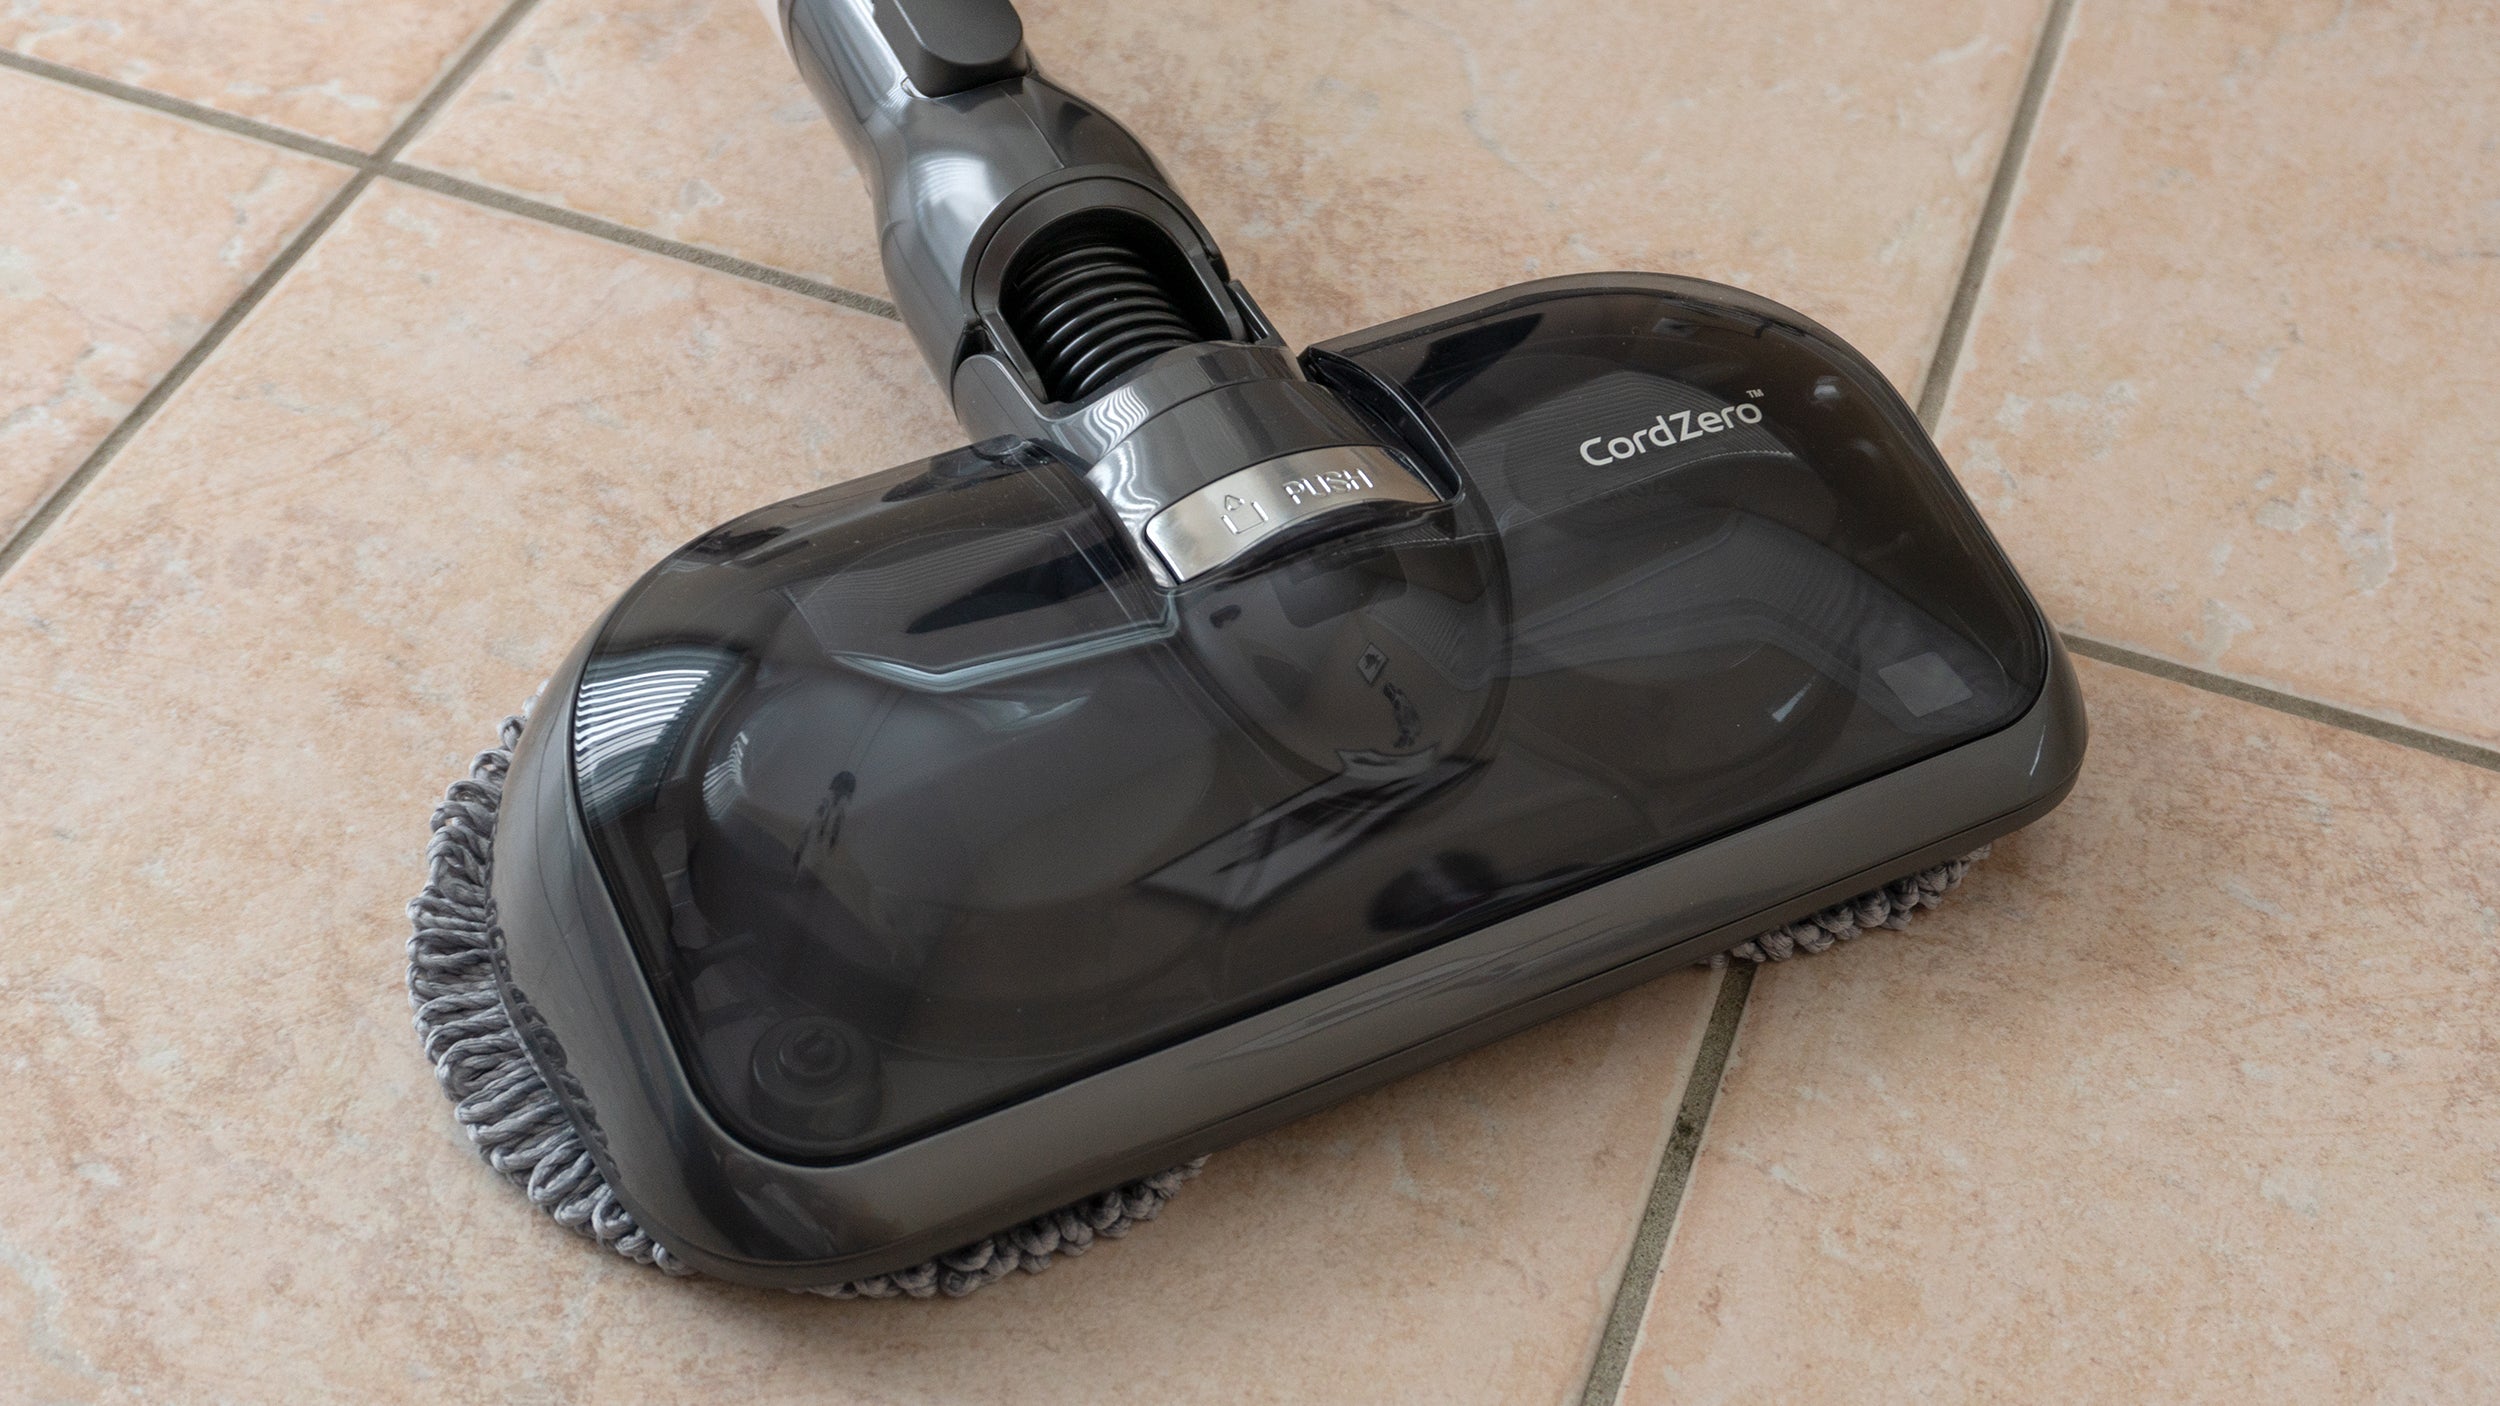 The A9 Kompressor+ also includes a Power Mop attachment for scrubbing floors. (Photo: Andrew Liszewski/Gizmodo)